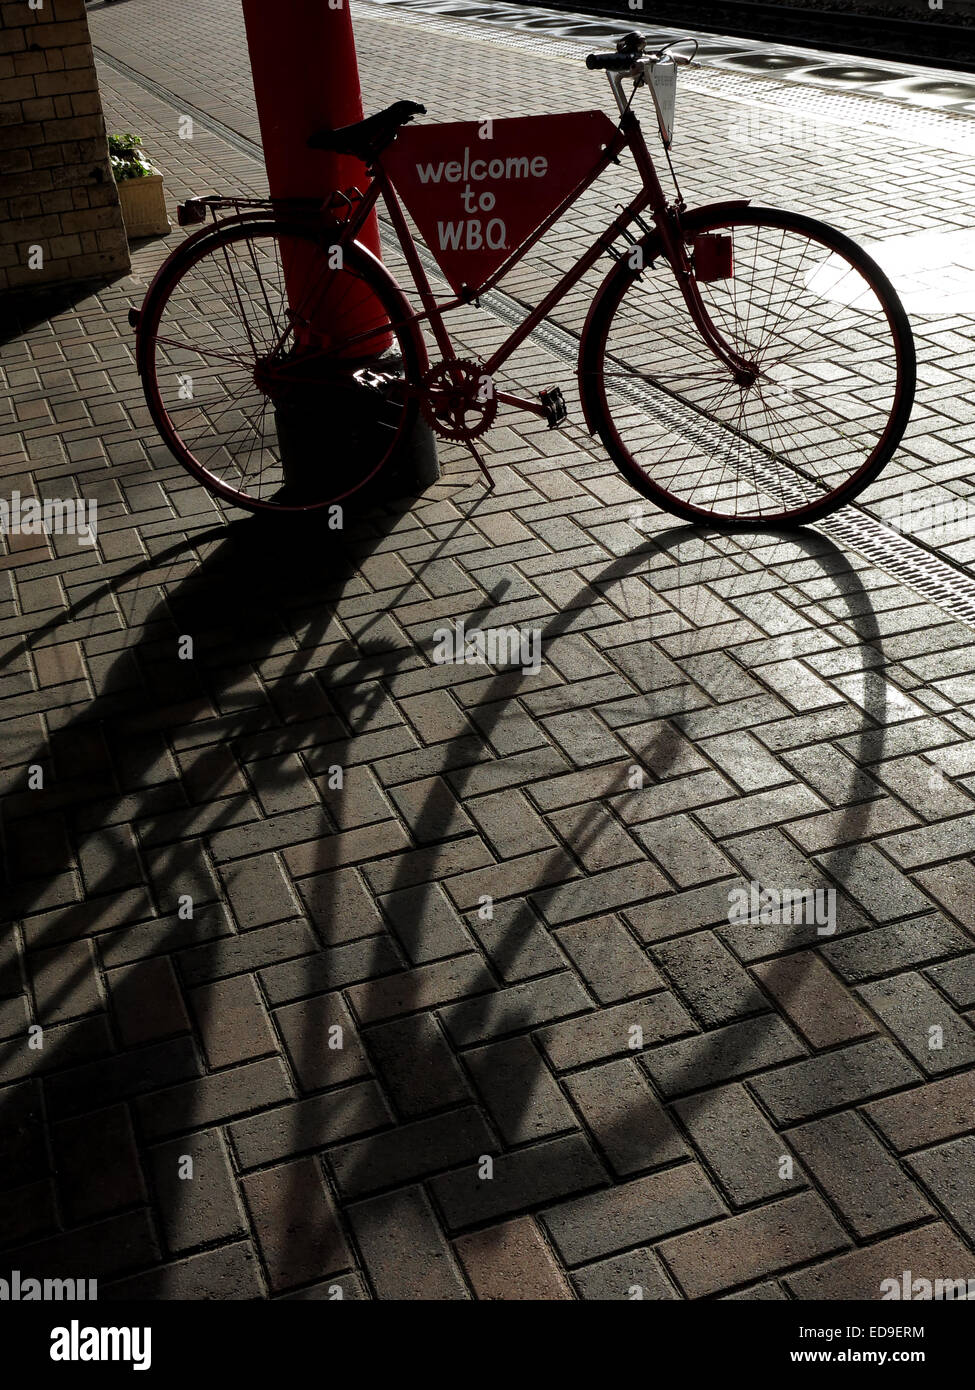 Welcome to Warrington Bank Quay Railway Station, Cheshire, England UK bike in shadow Stock Photo